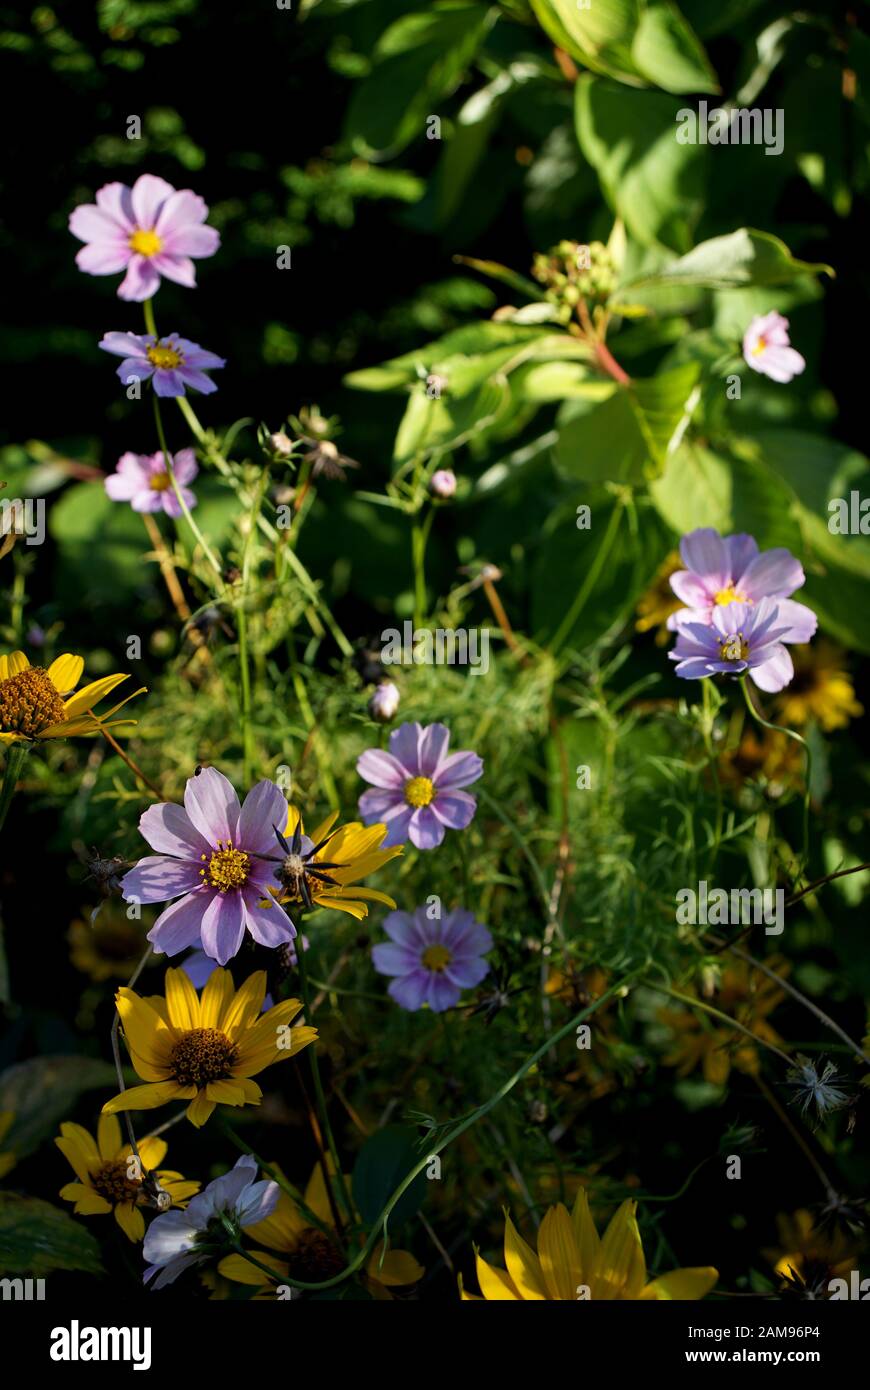 lush summer flowers in the garden Stock Photo